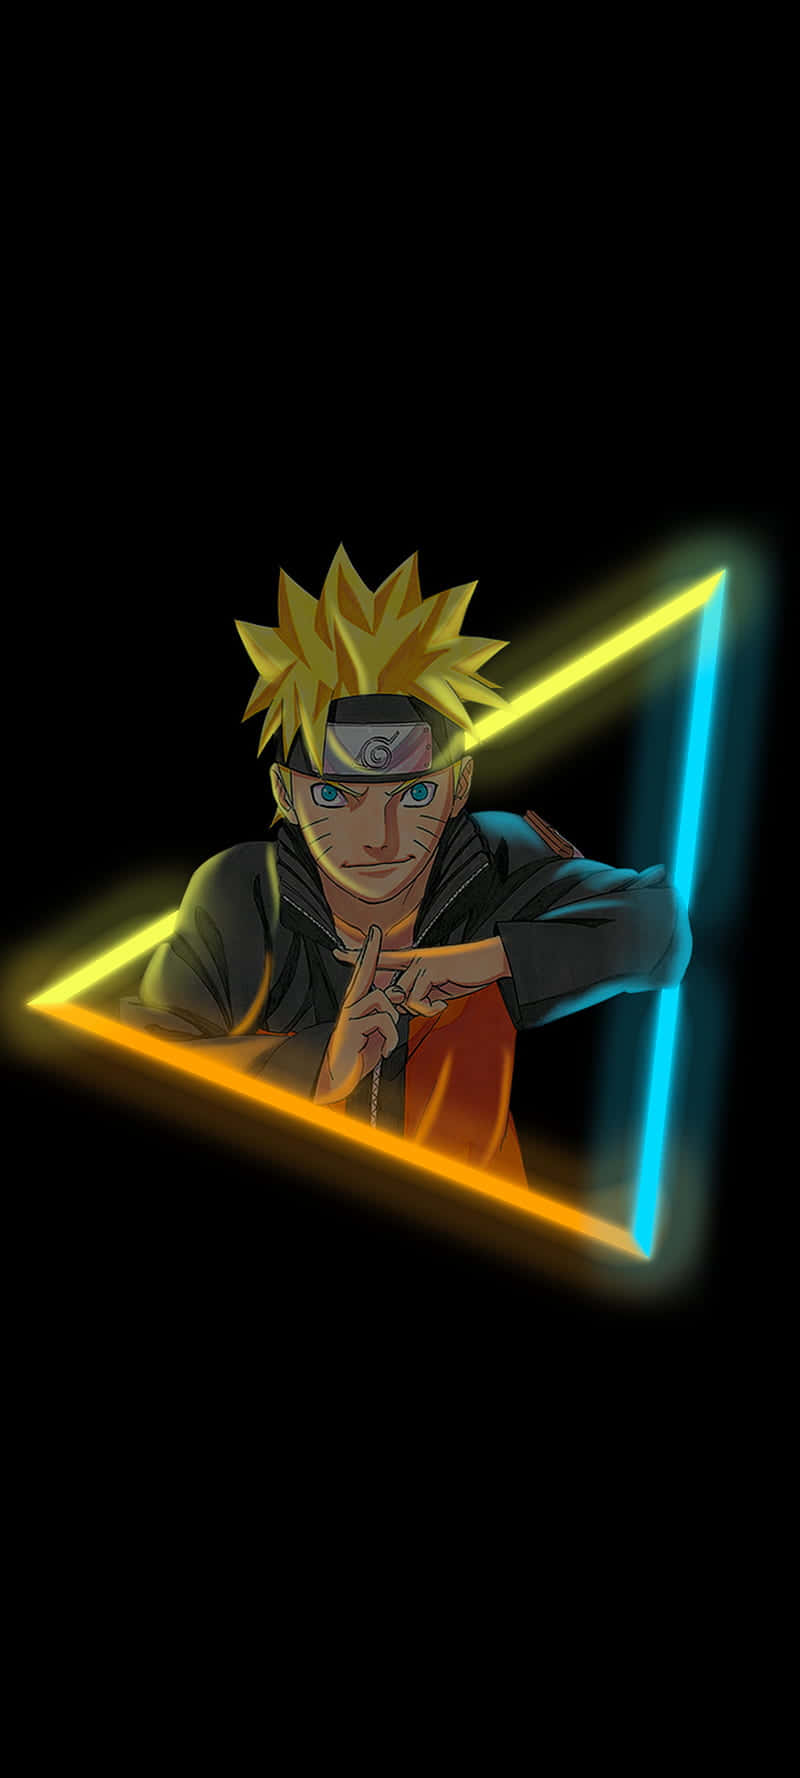 Naruto Mobile Wallpapers - Latest Naruto Mobile Backgrounds - WallpaperTeg